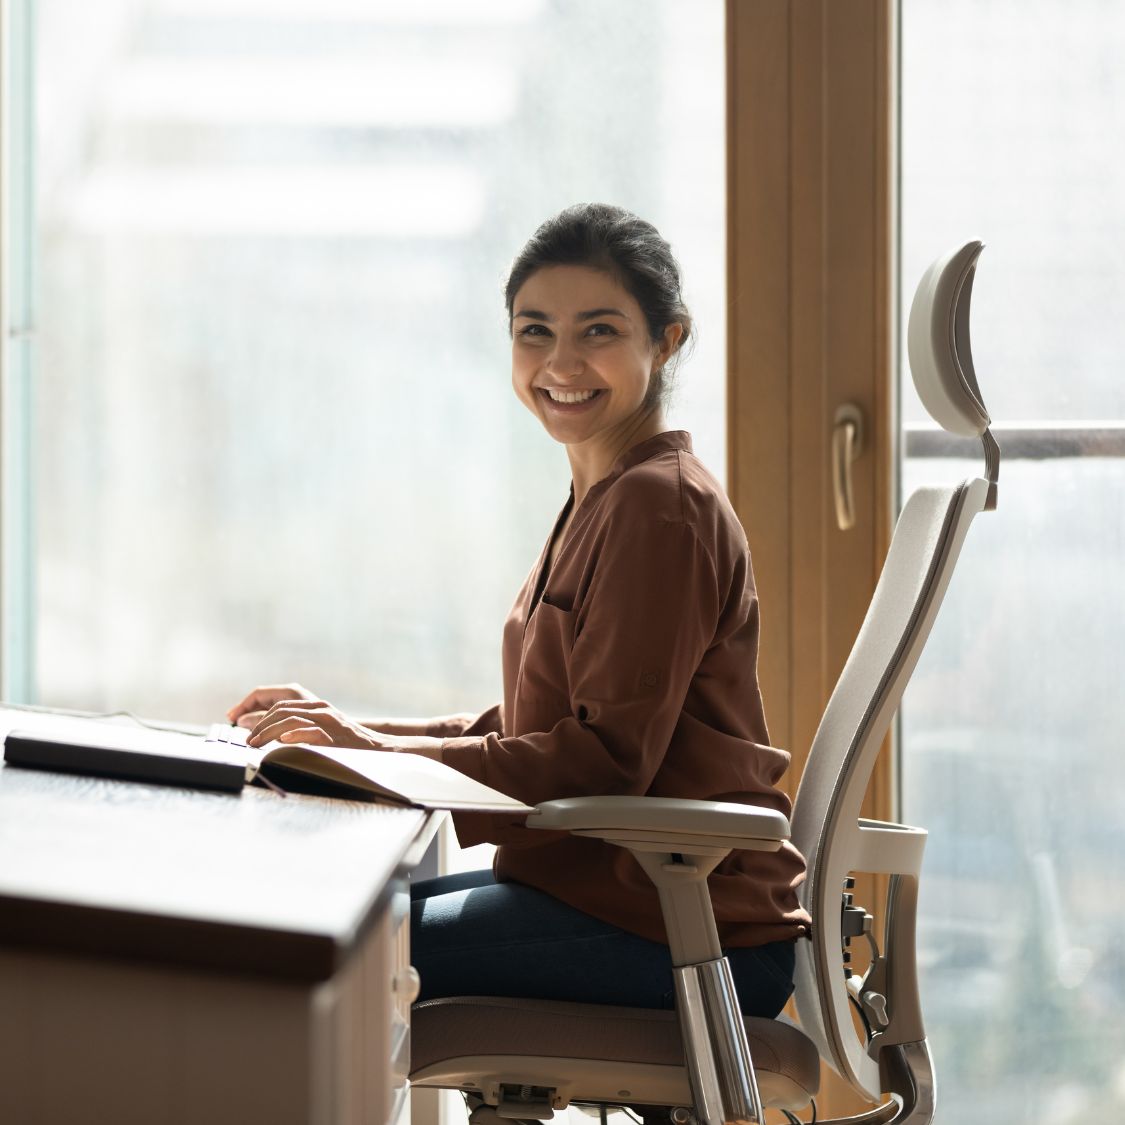 4 Tips for Choosing an Ergonomic Office Chair